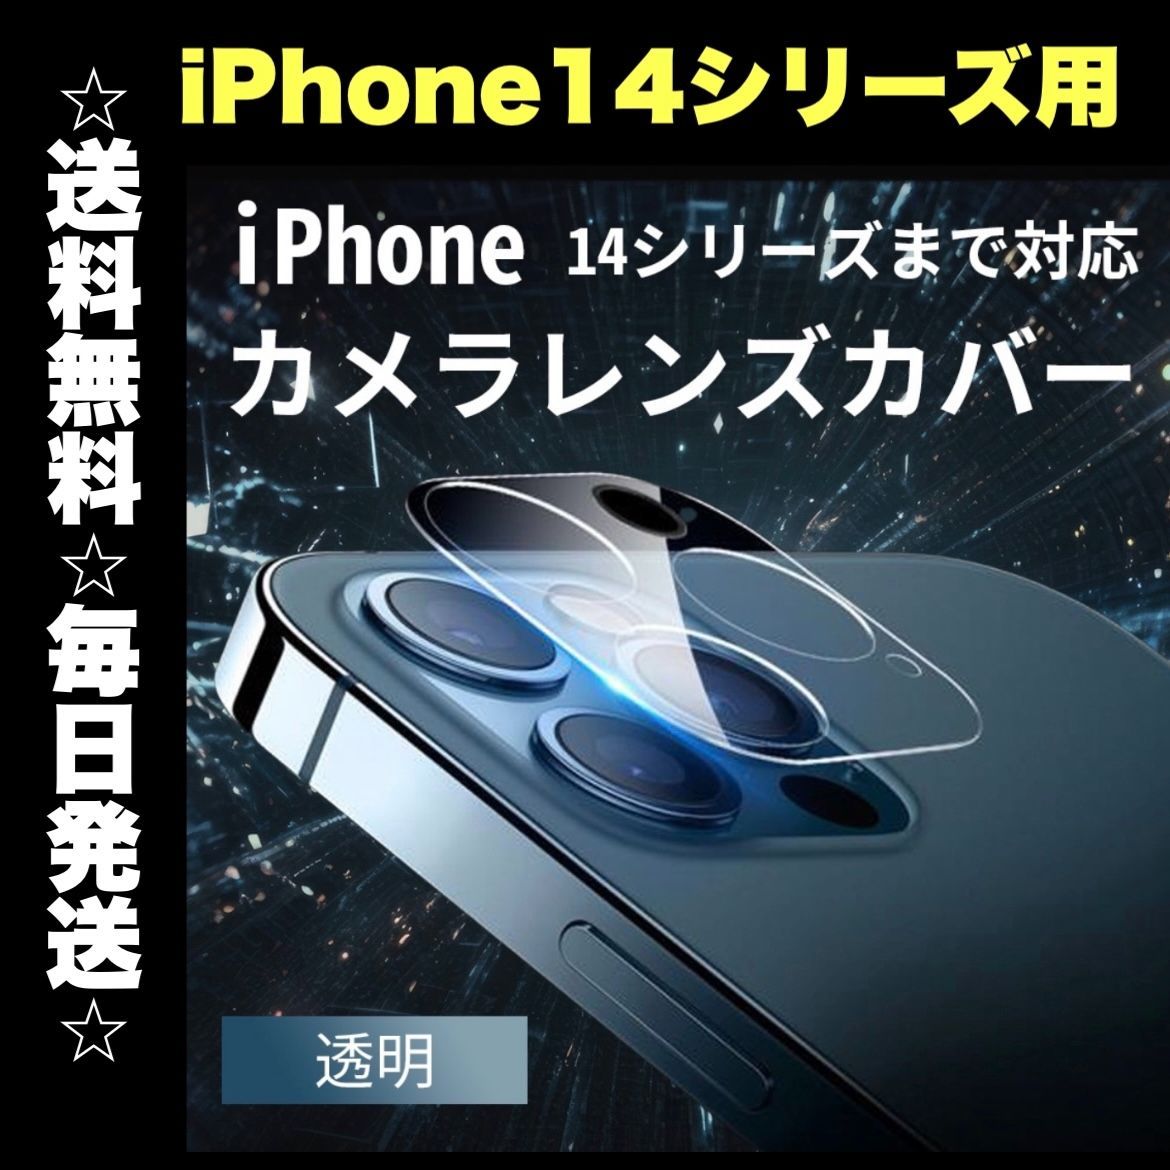 iPhone14Pro iPone14 iPhone14promax iPhone14plus 透明 カメラレンズカバー カメラカバー レンズ保護  iPhone フィルム iPhone 14 pro promax plus - メルカリShops